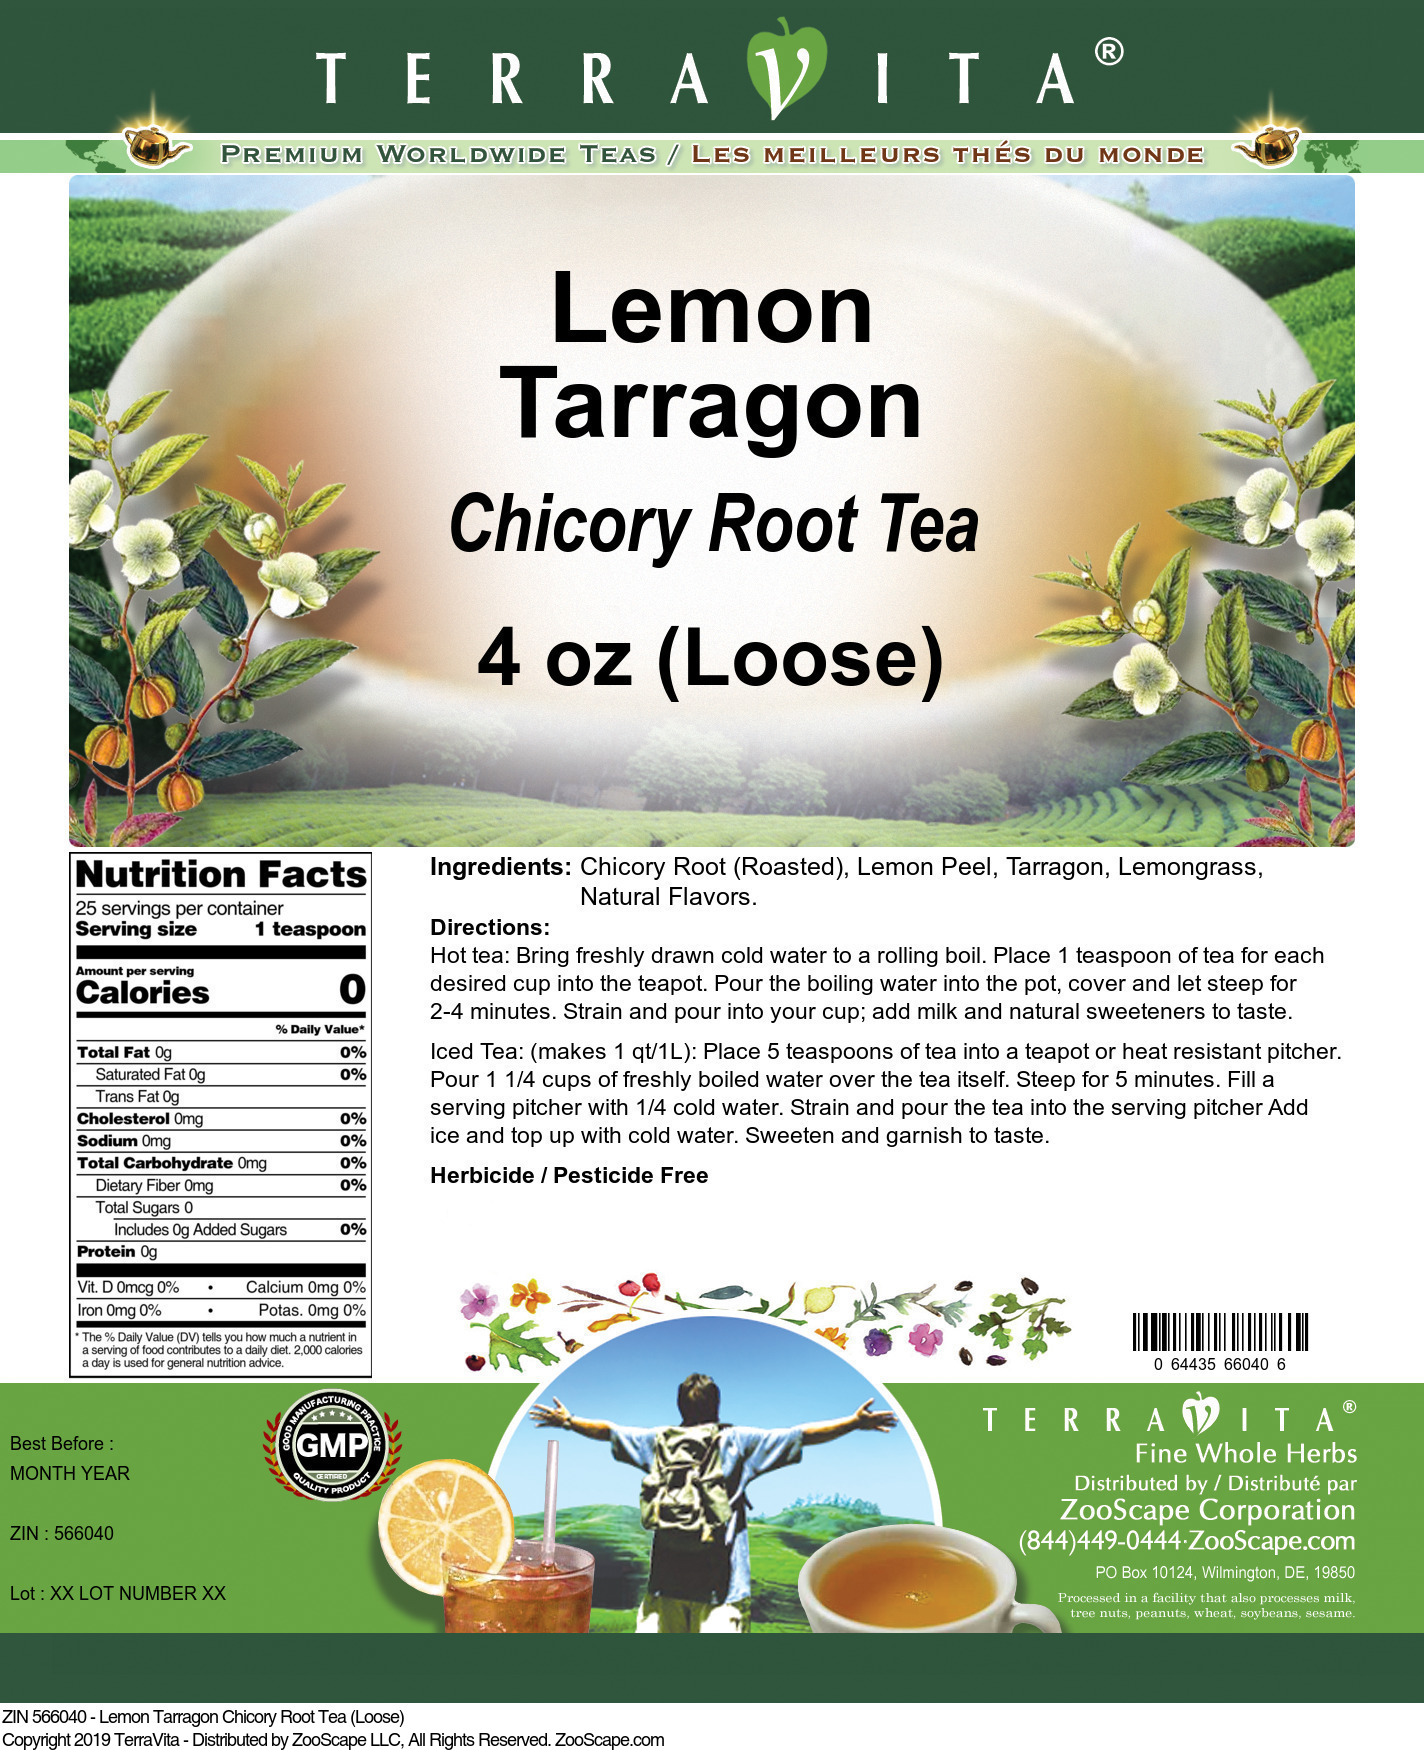 Lemon Tarragon Chicory Root Tea (Loose) - Label